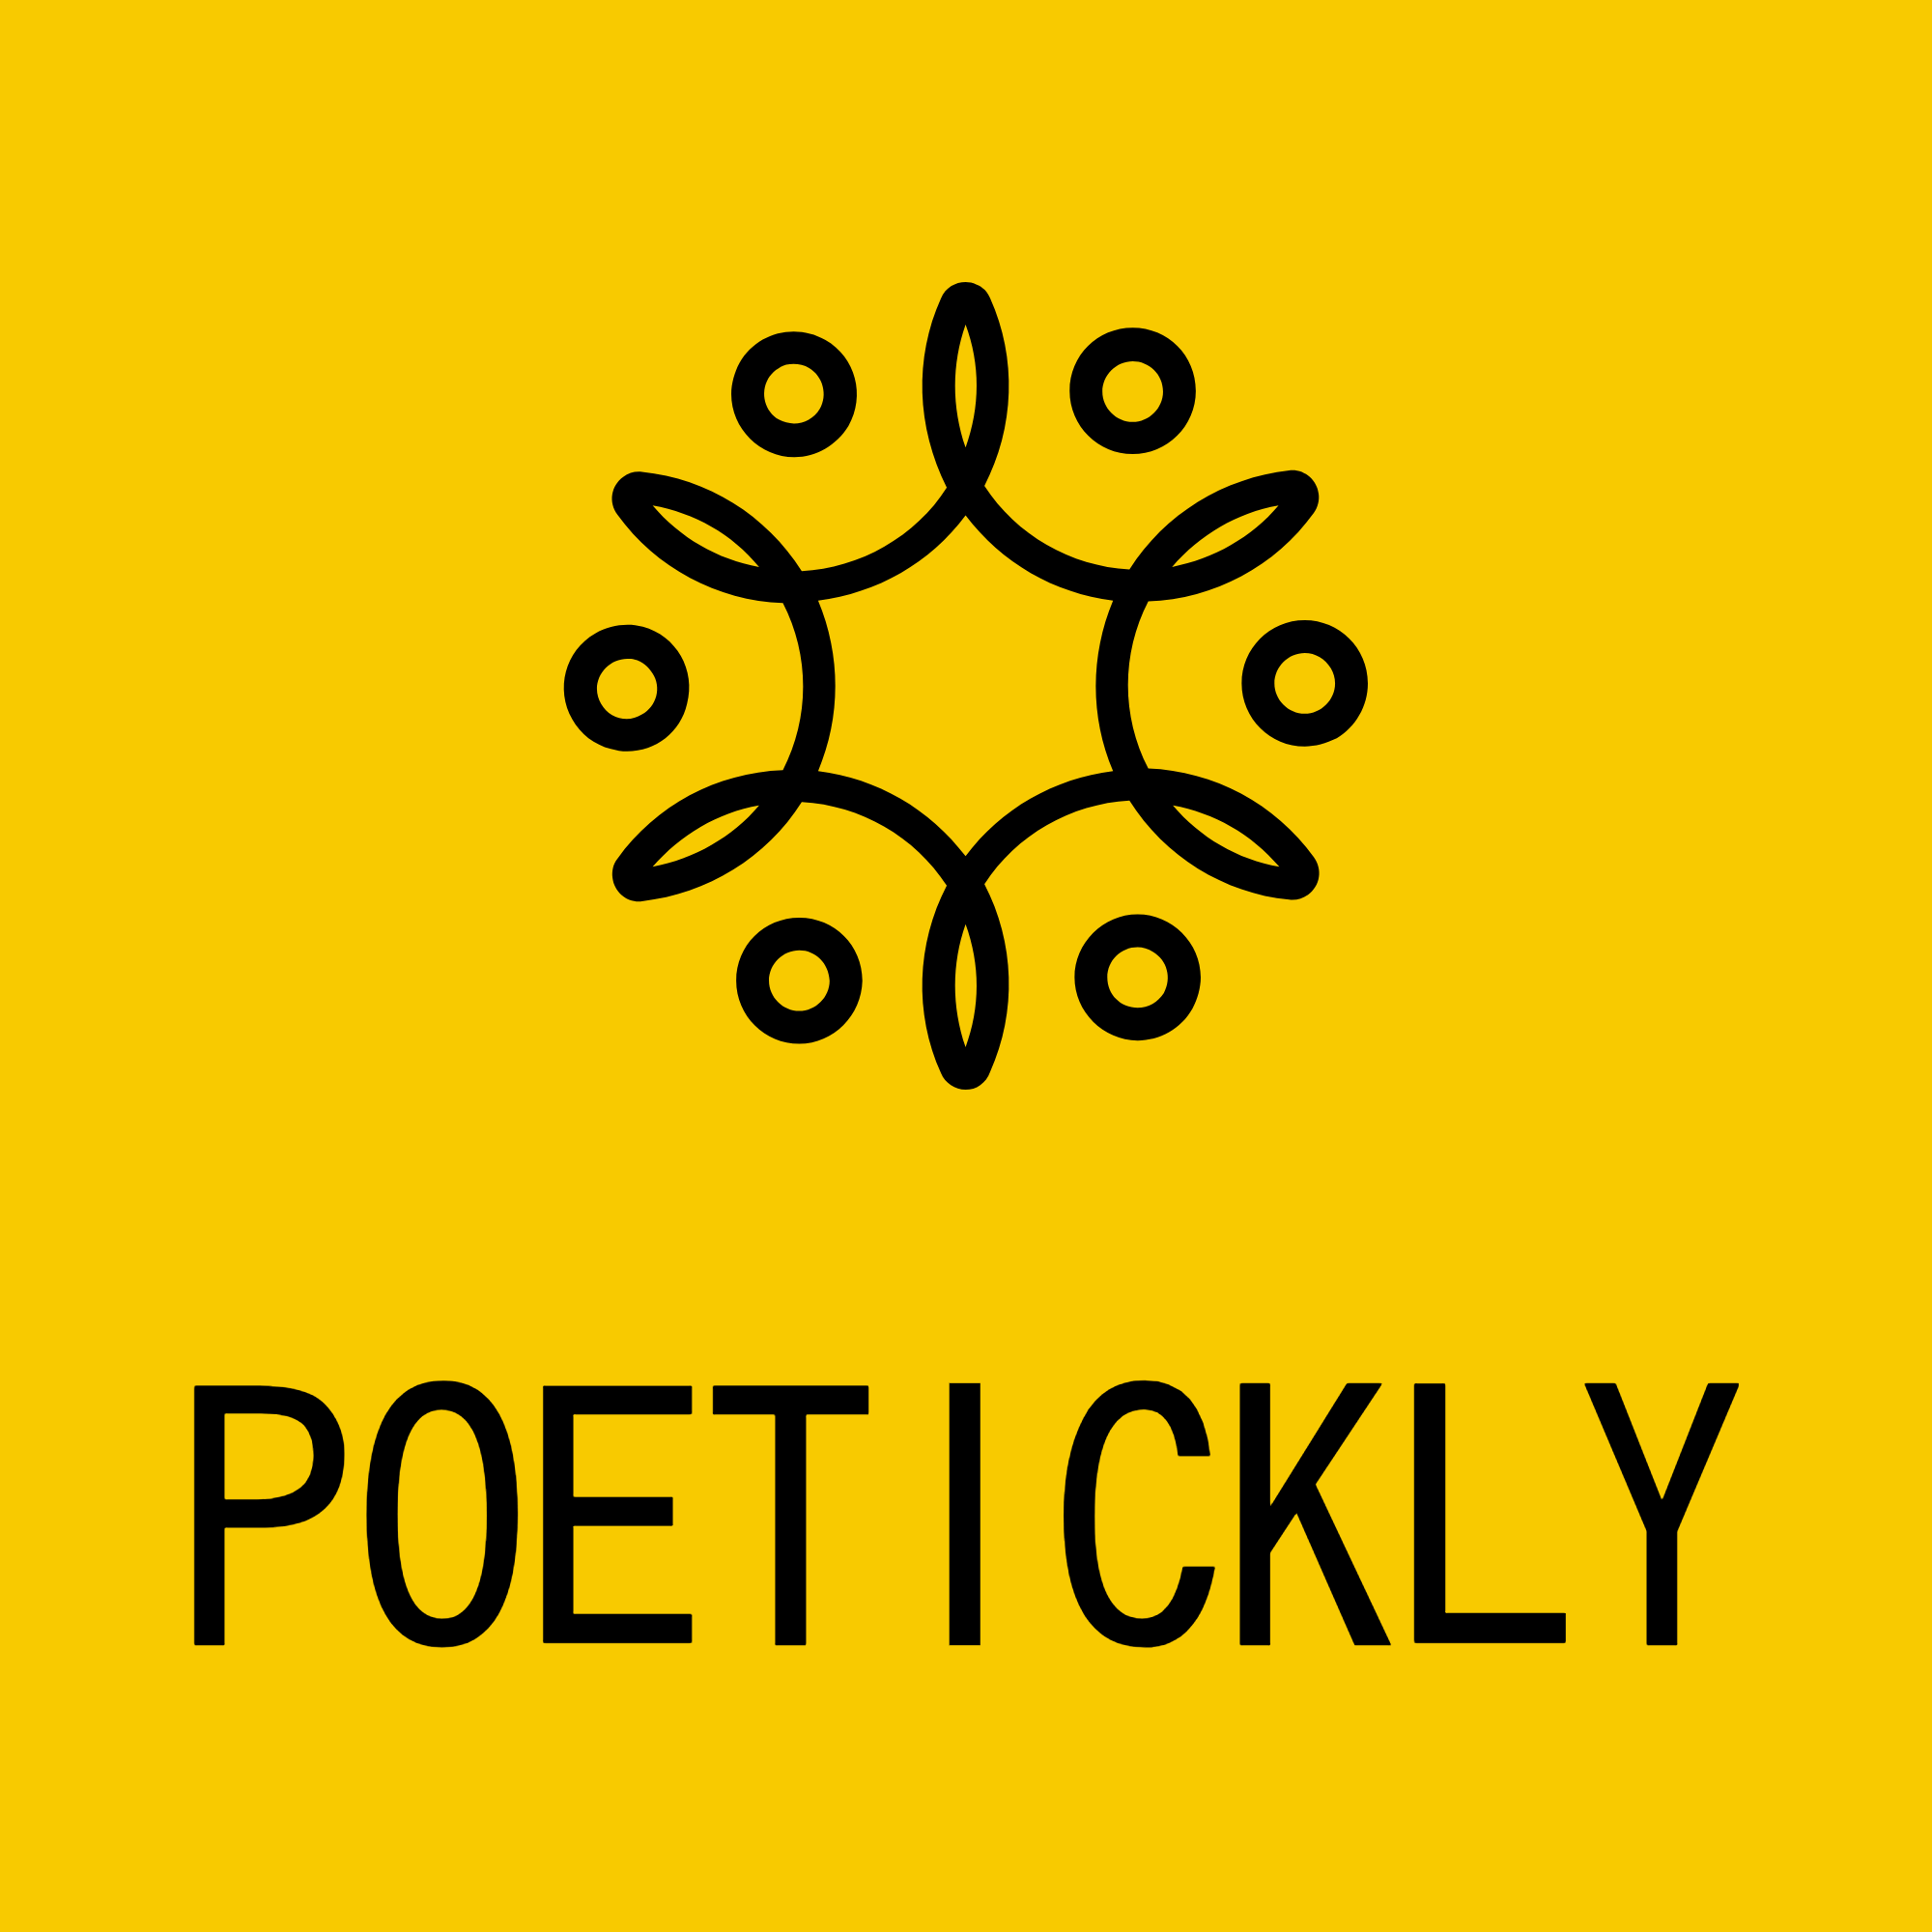 Poetickly.com